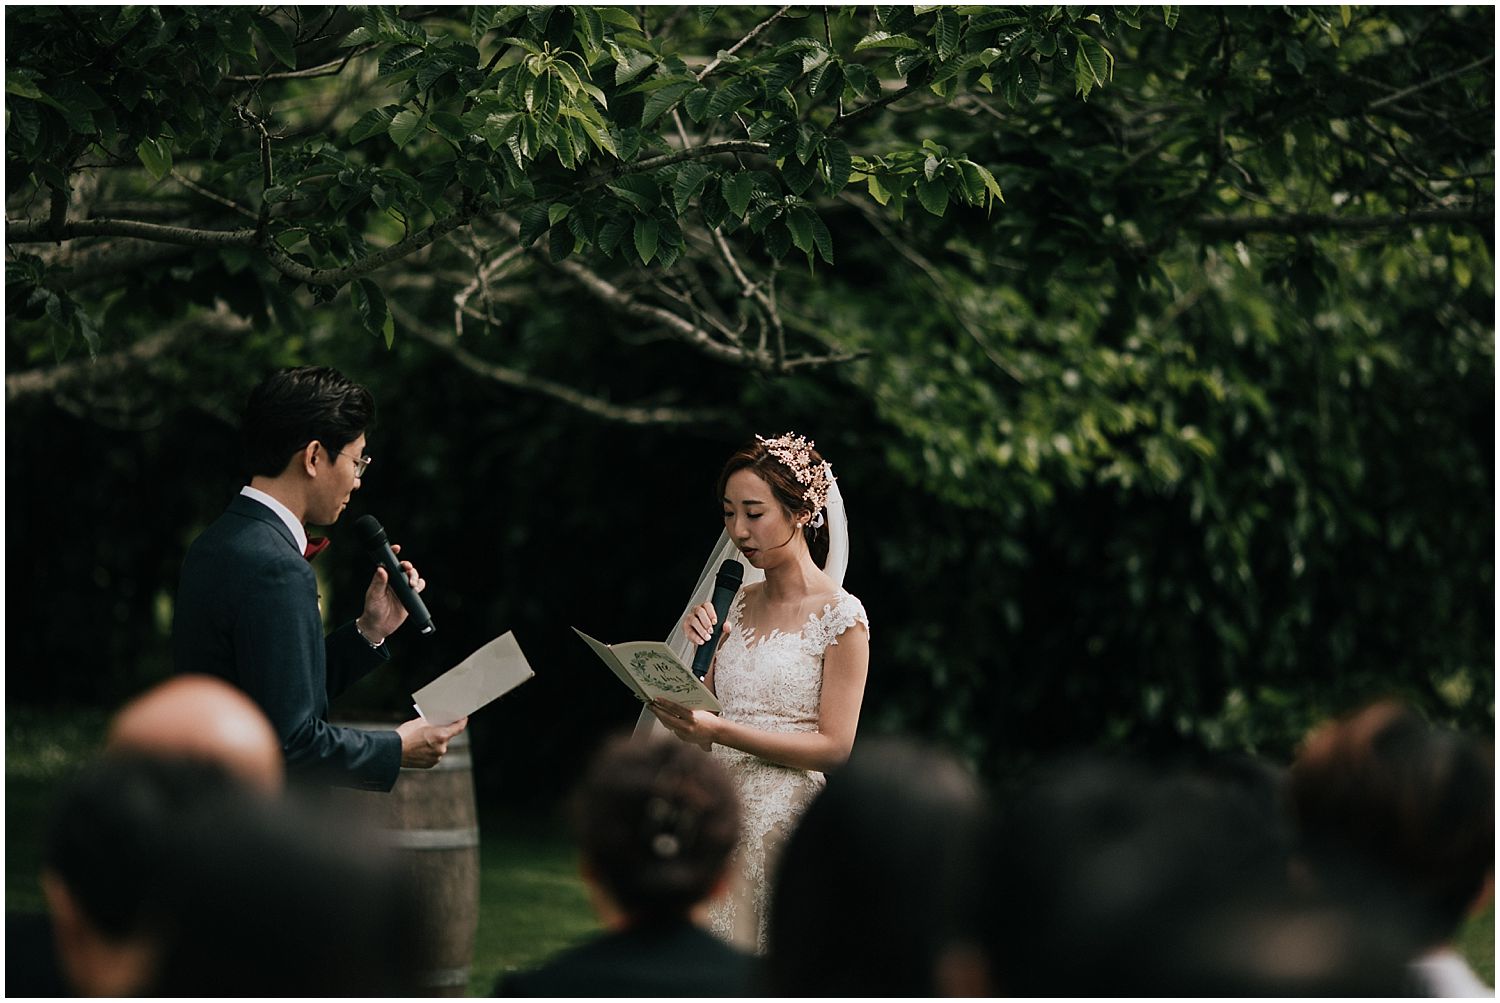 Outdoor wedding ceremony at Markovina Vineyard Estate